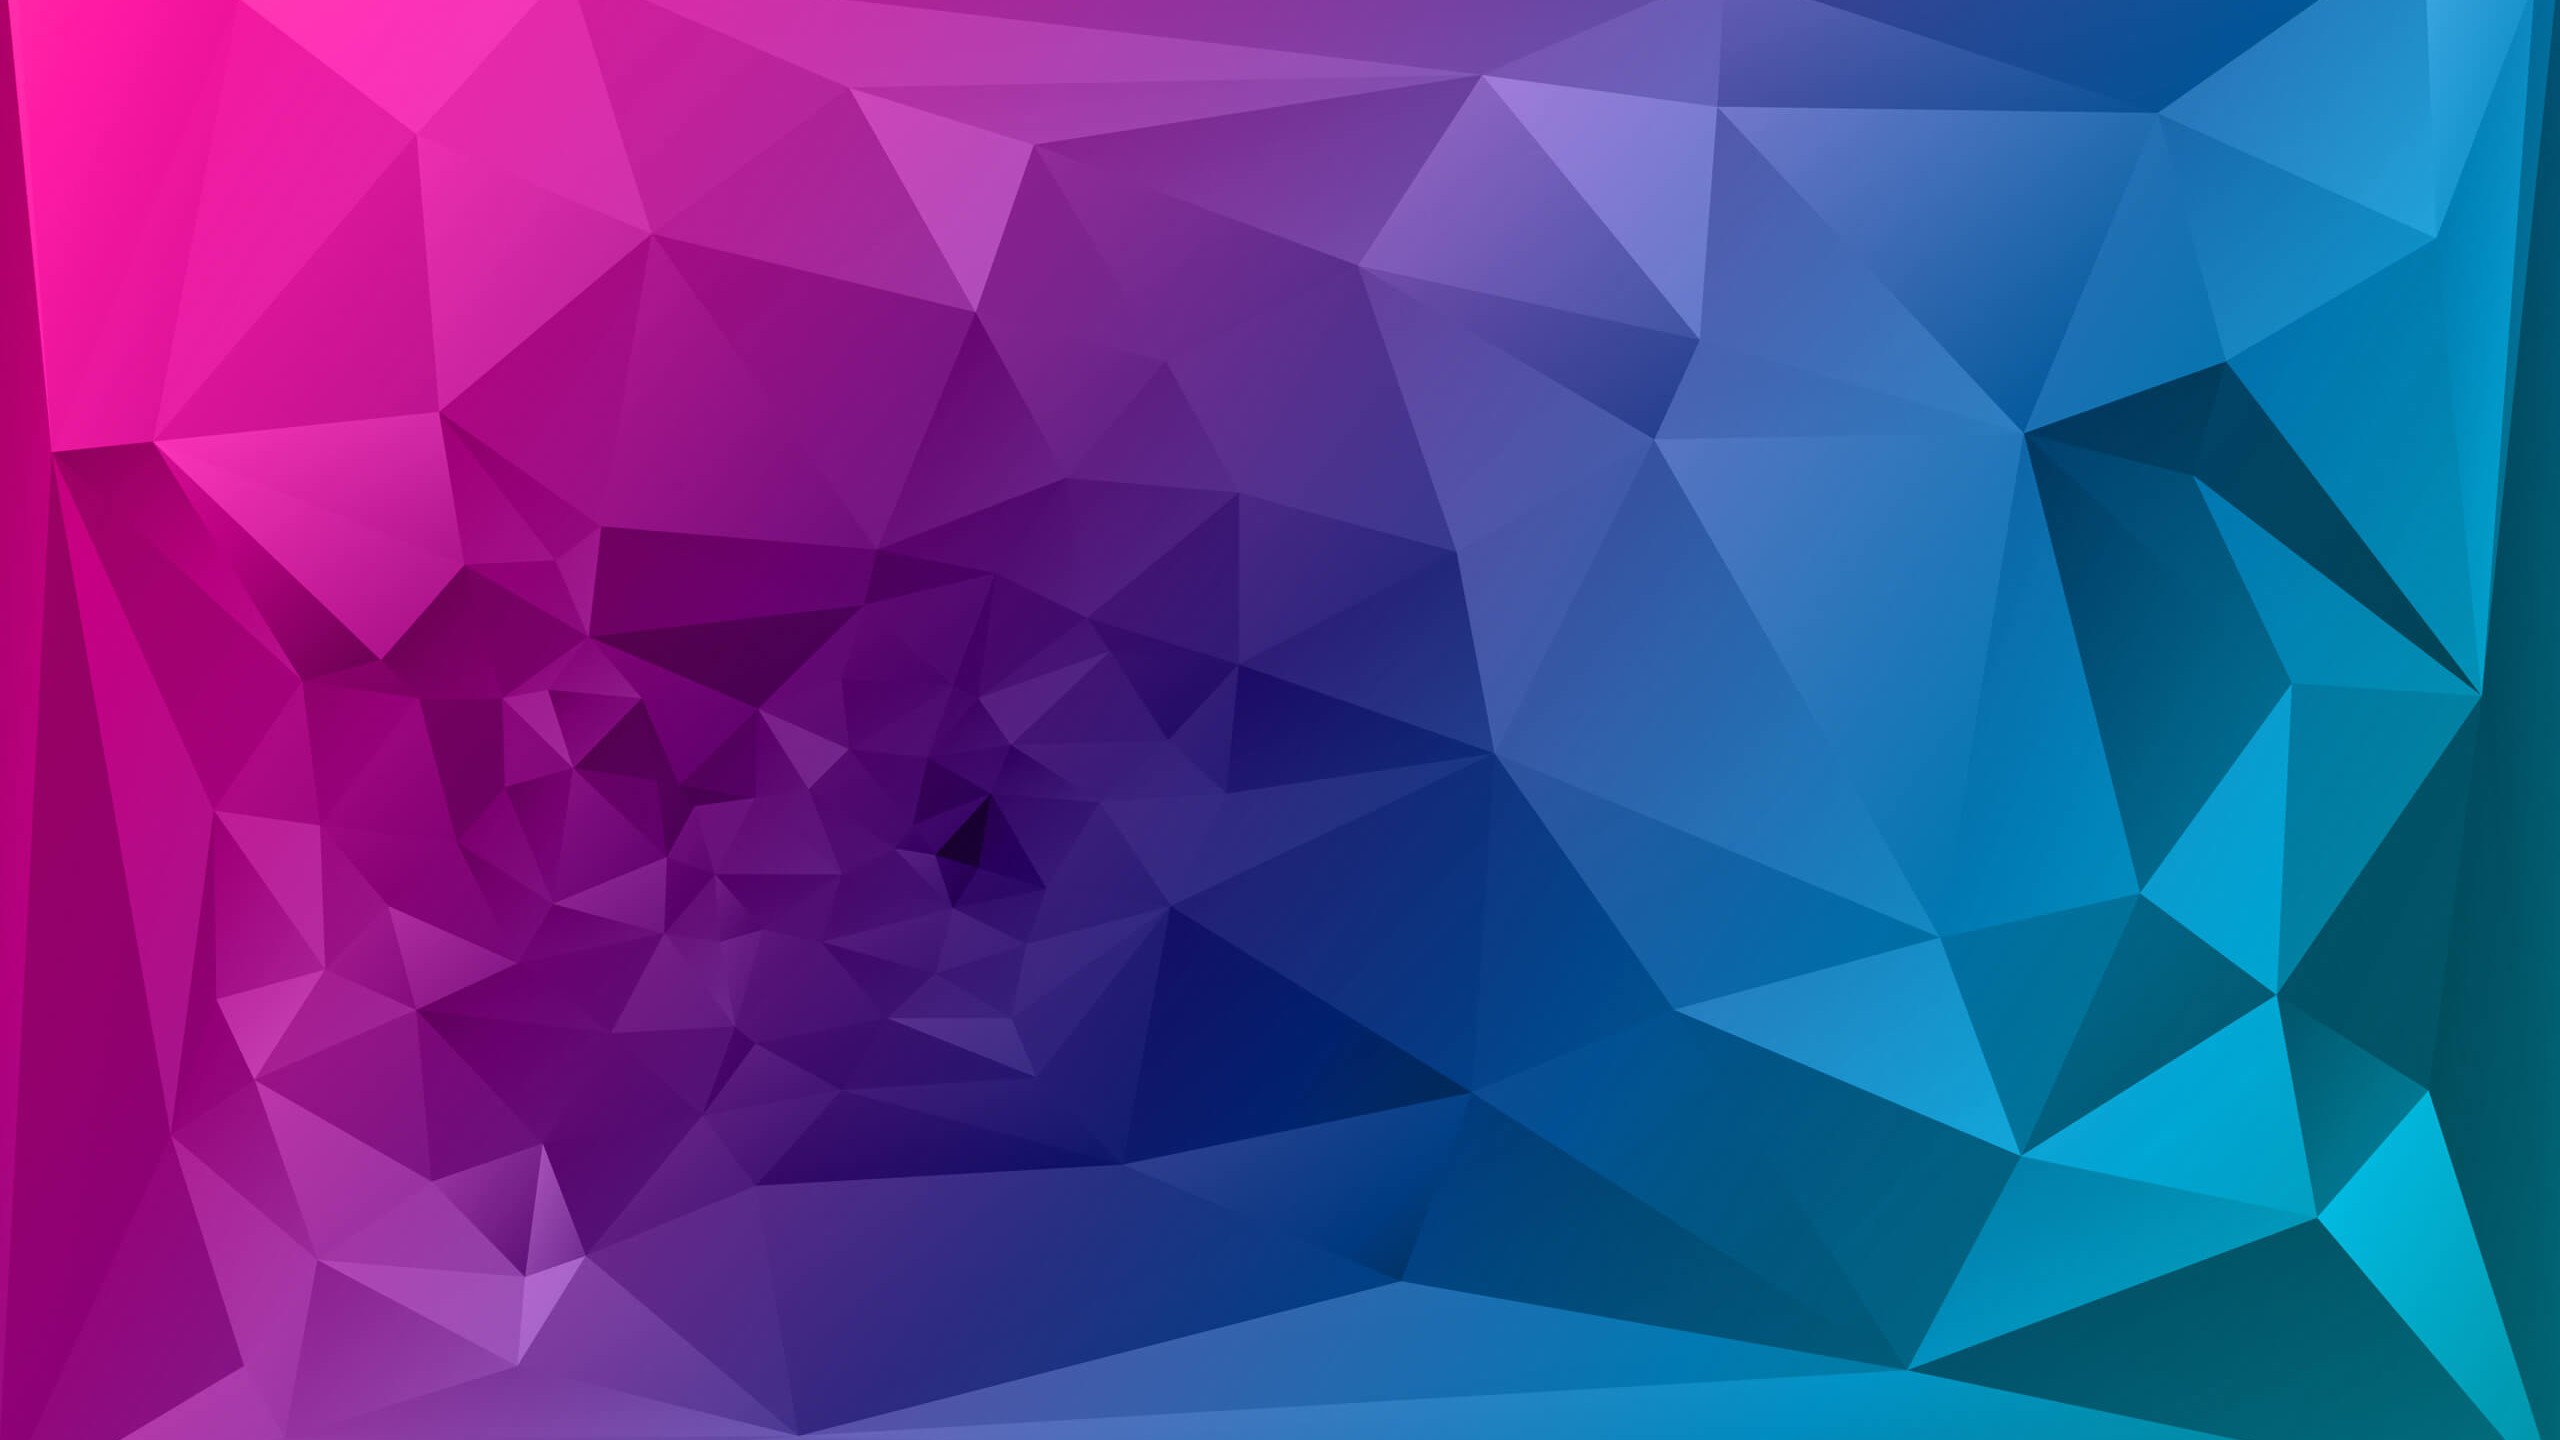 Polygonal Background Wallpaper For Social Media Channel Art